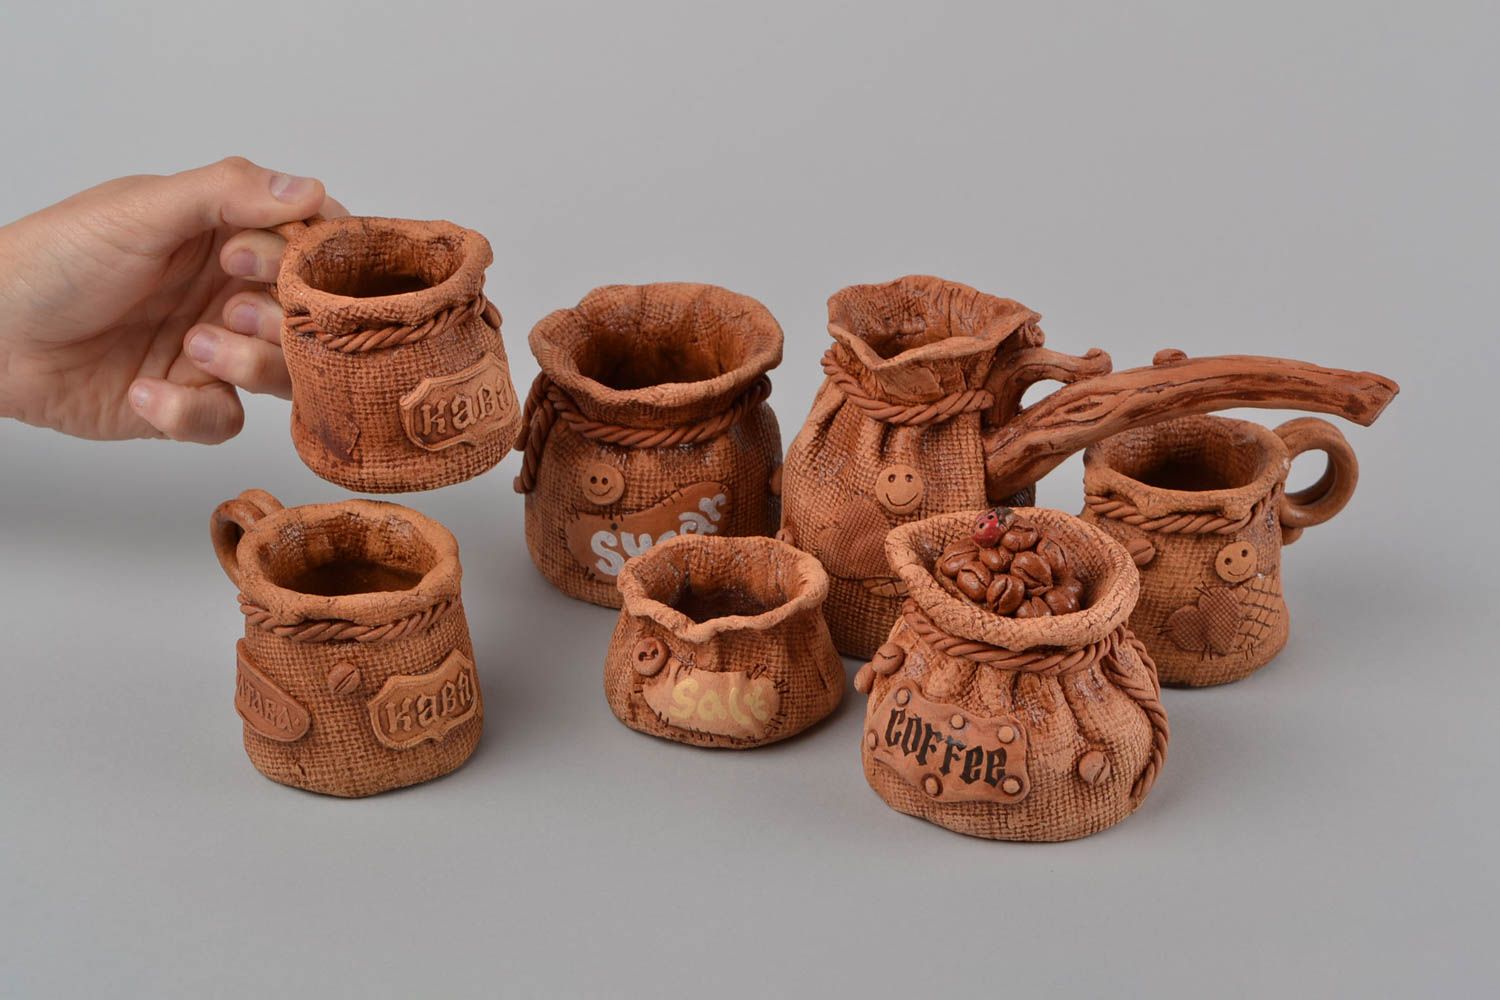  Clay brow decorative pottery set in 7 pieces - three espresso cups, coffee turk, sugar, and salt jars photo 5